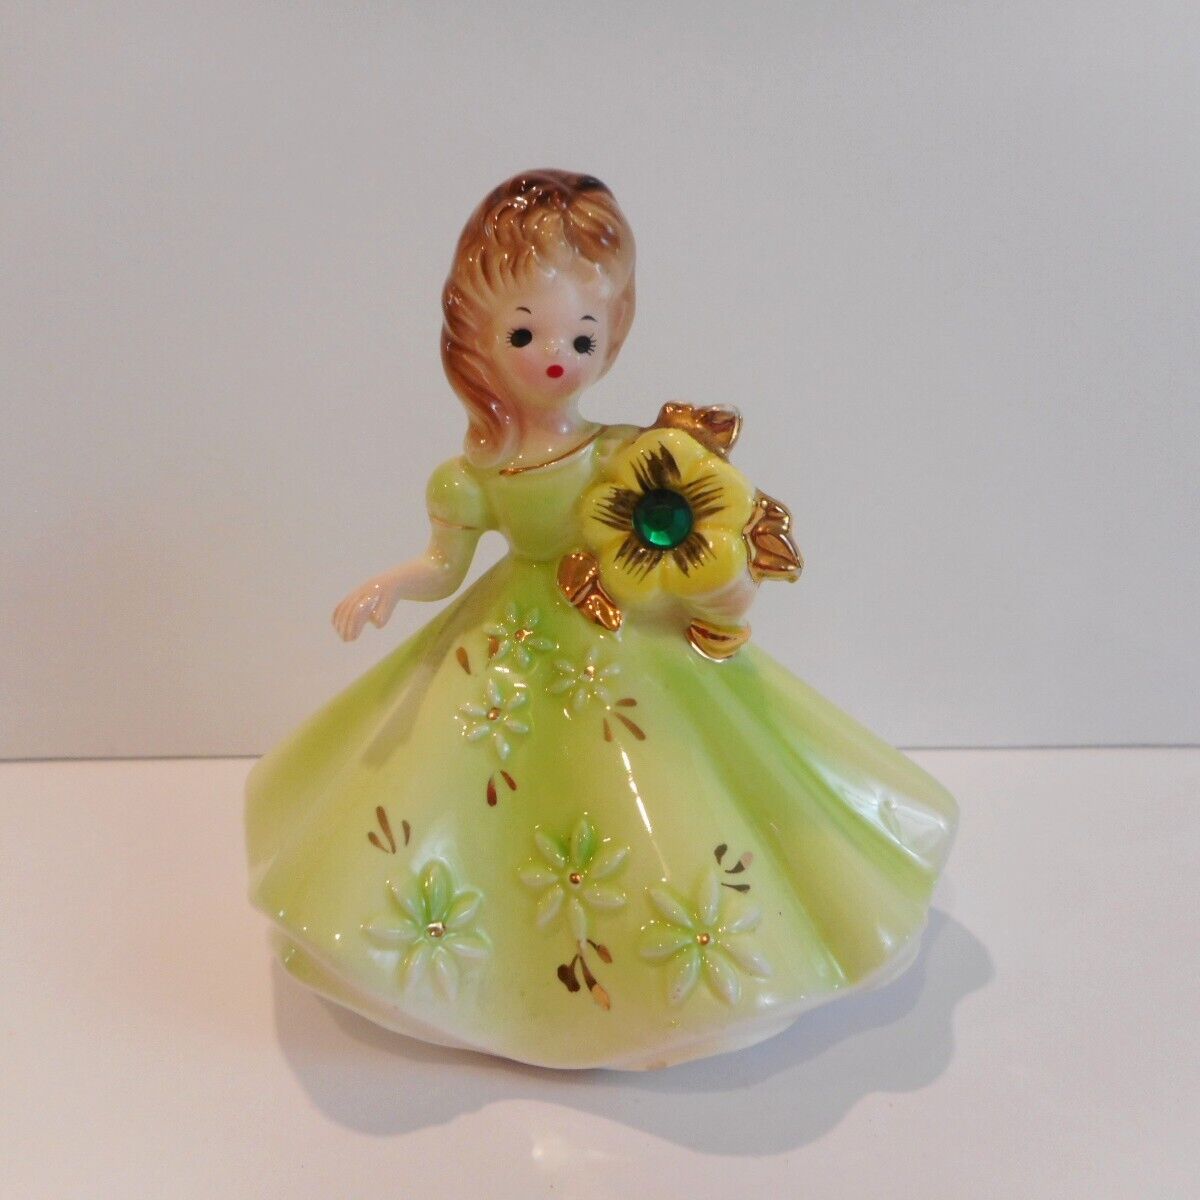 Vintage Retro Josef Originals Porcelain Figurine May Birthstone Doll Emerald